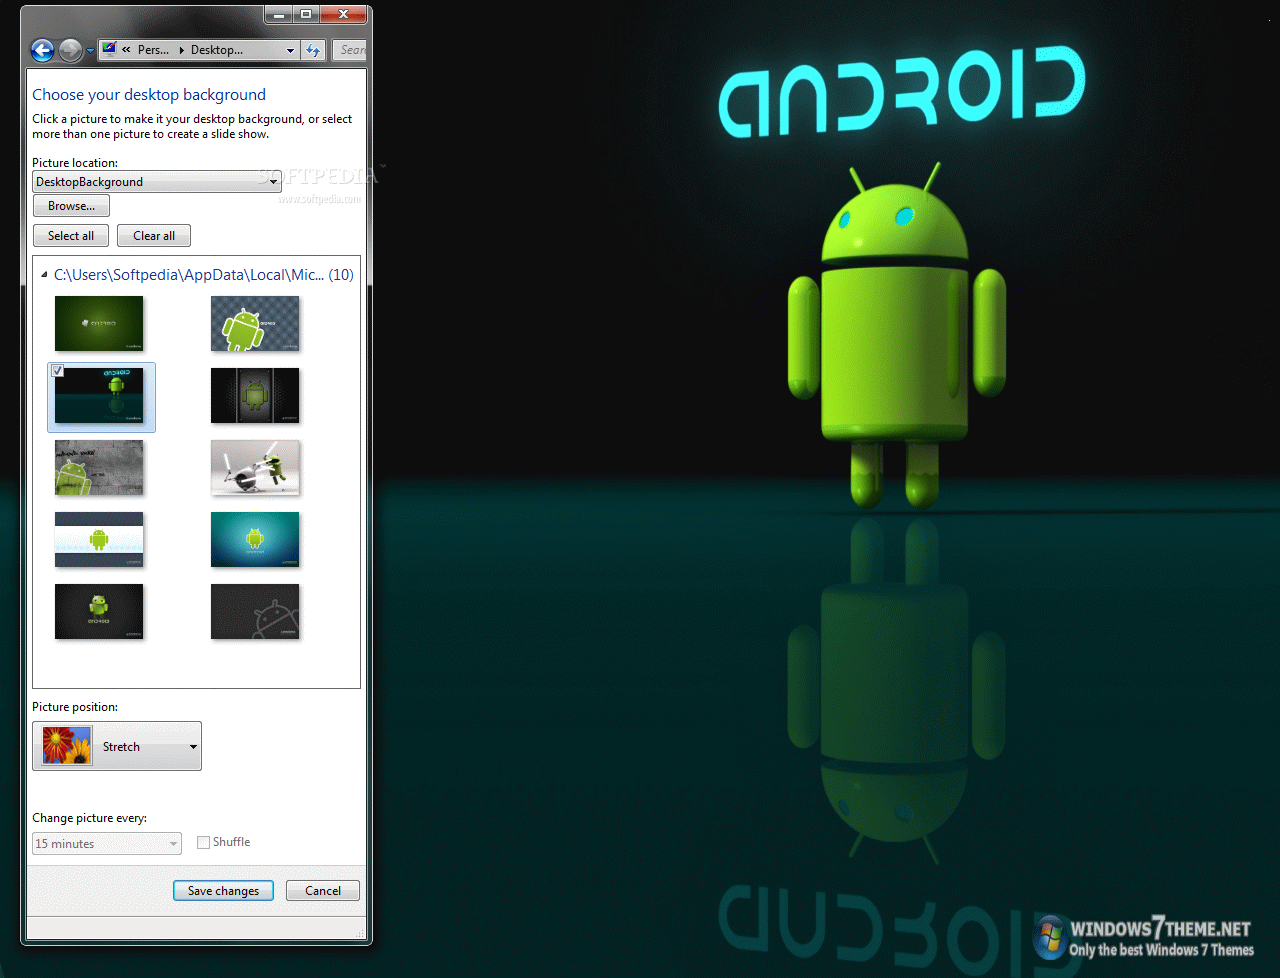 Android Windows 7 Theme